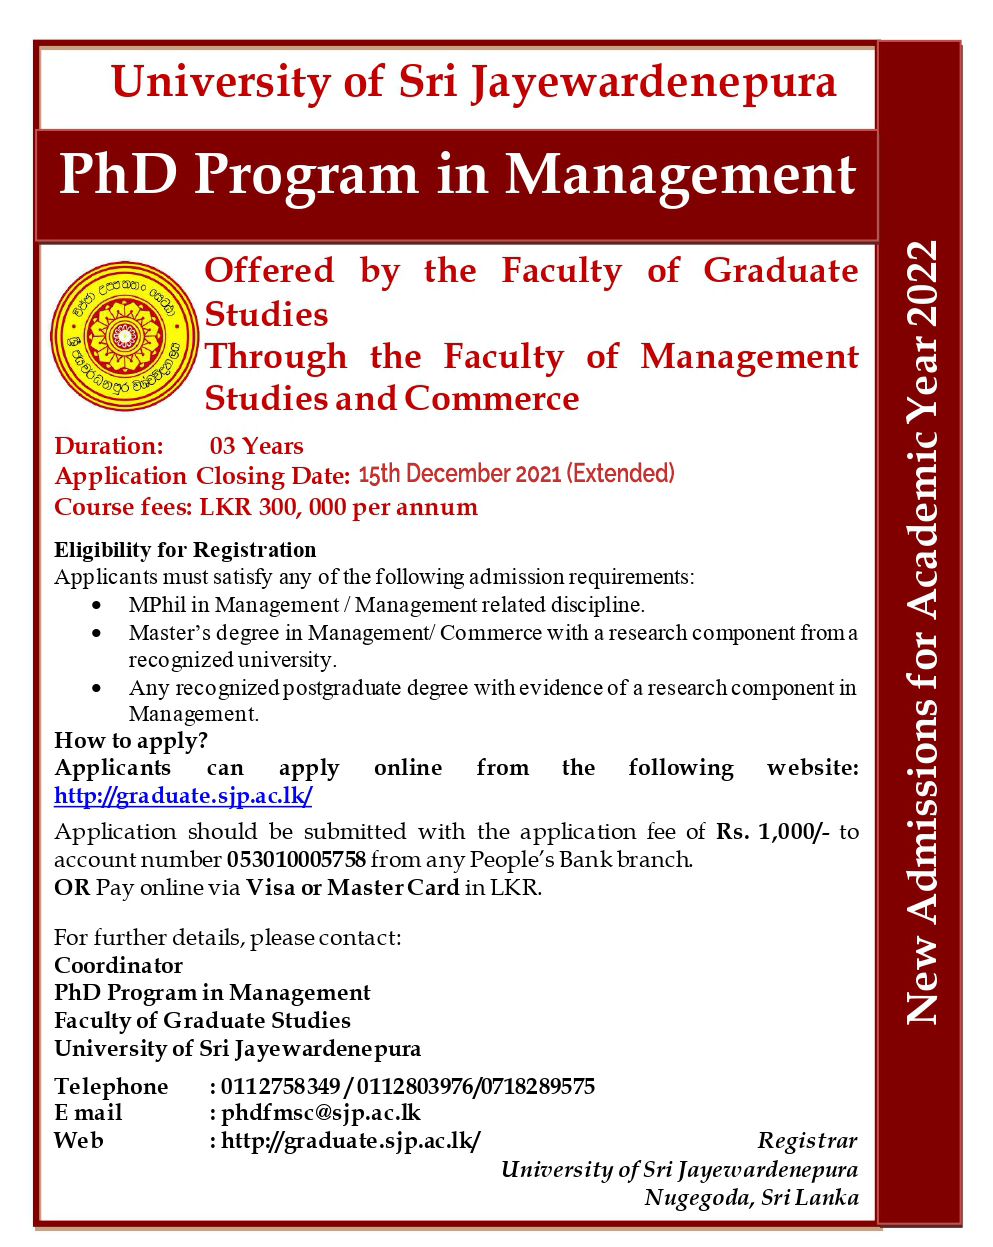 phd in management university of sri jayewardenepura